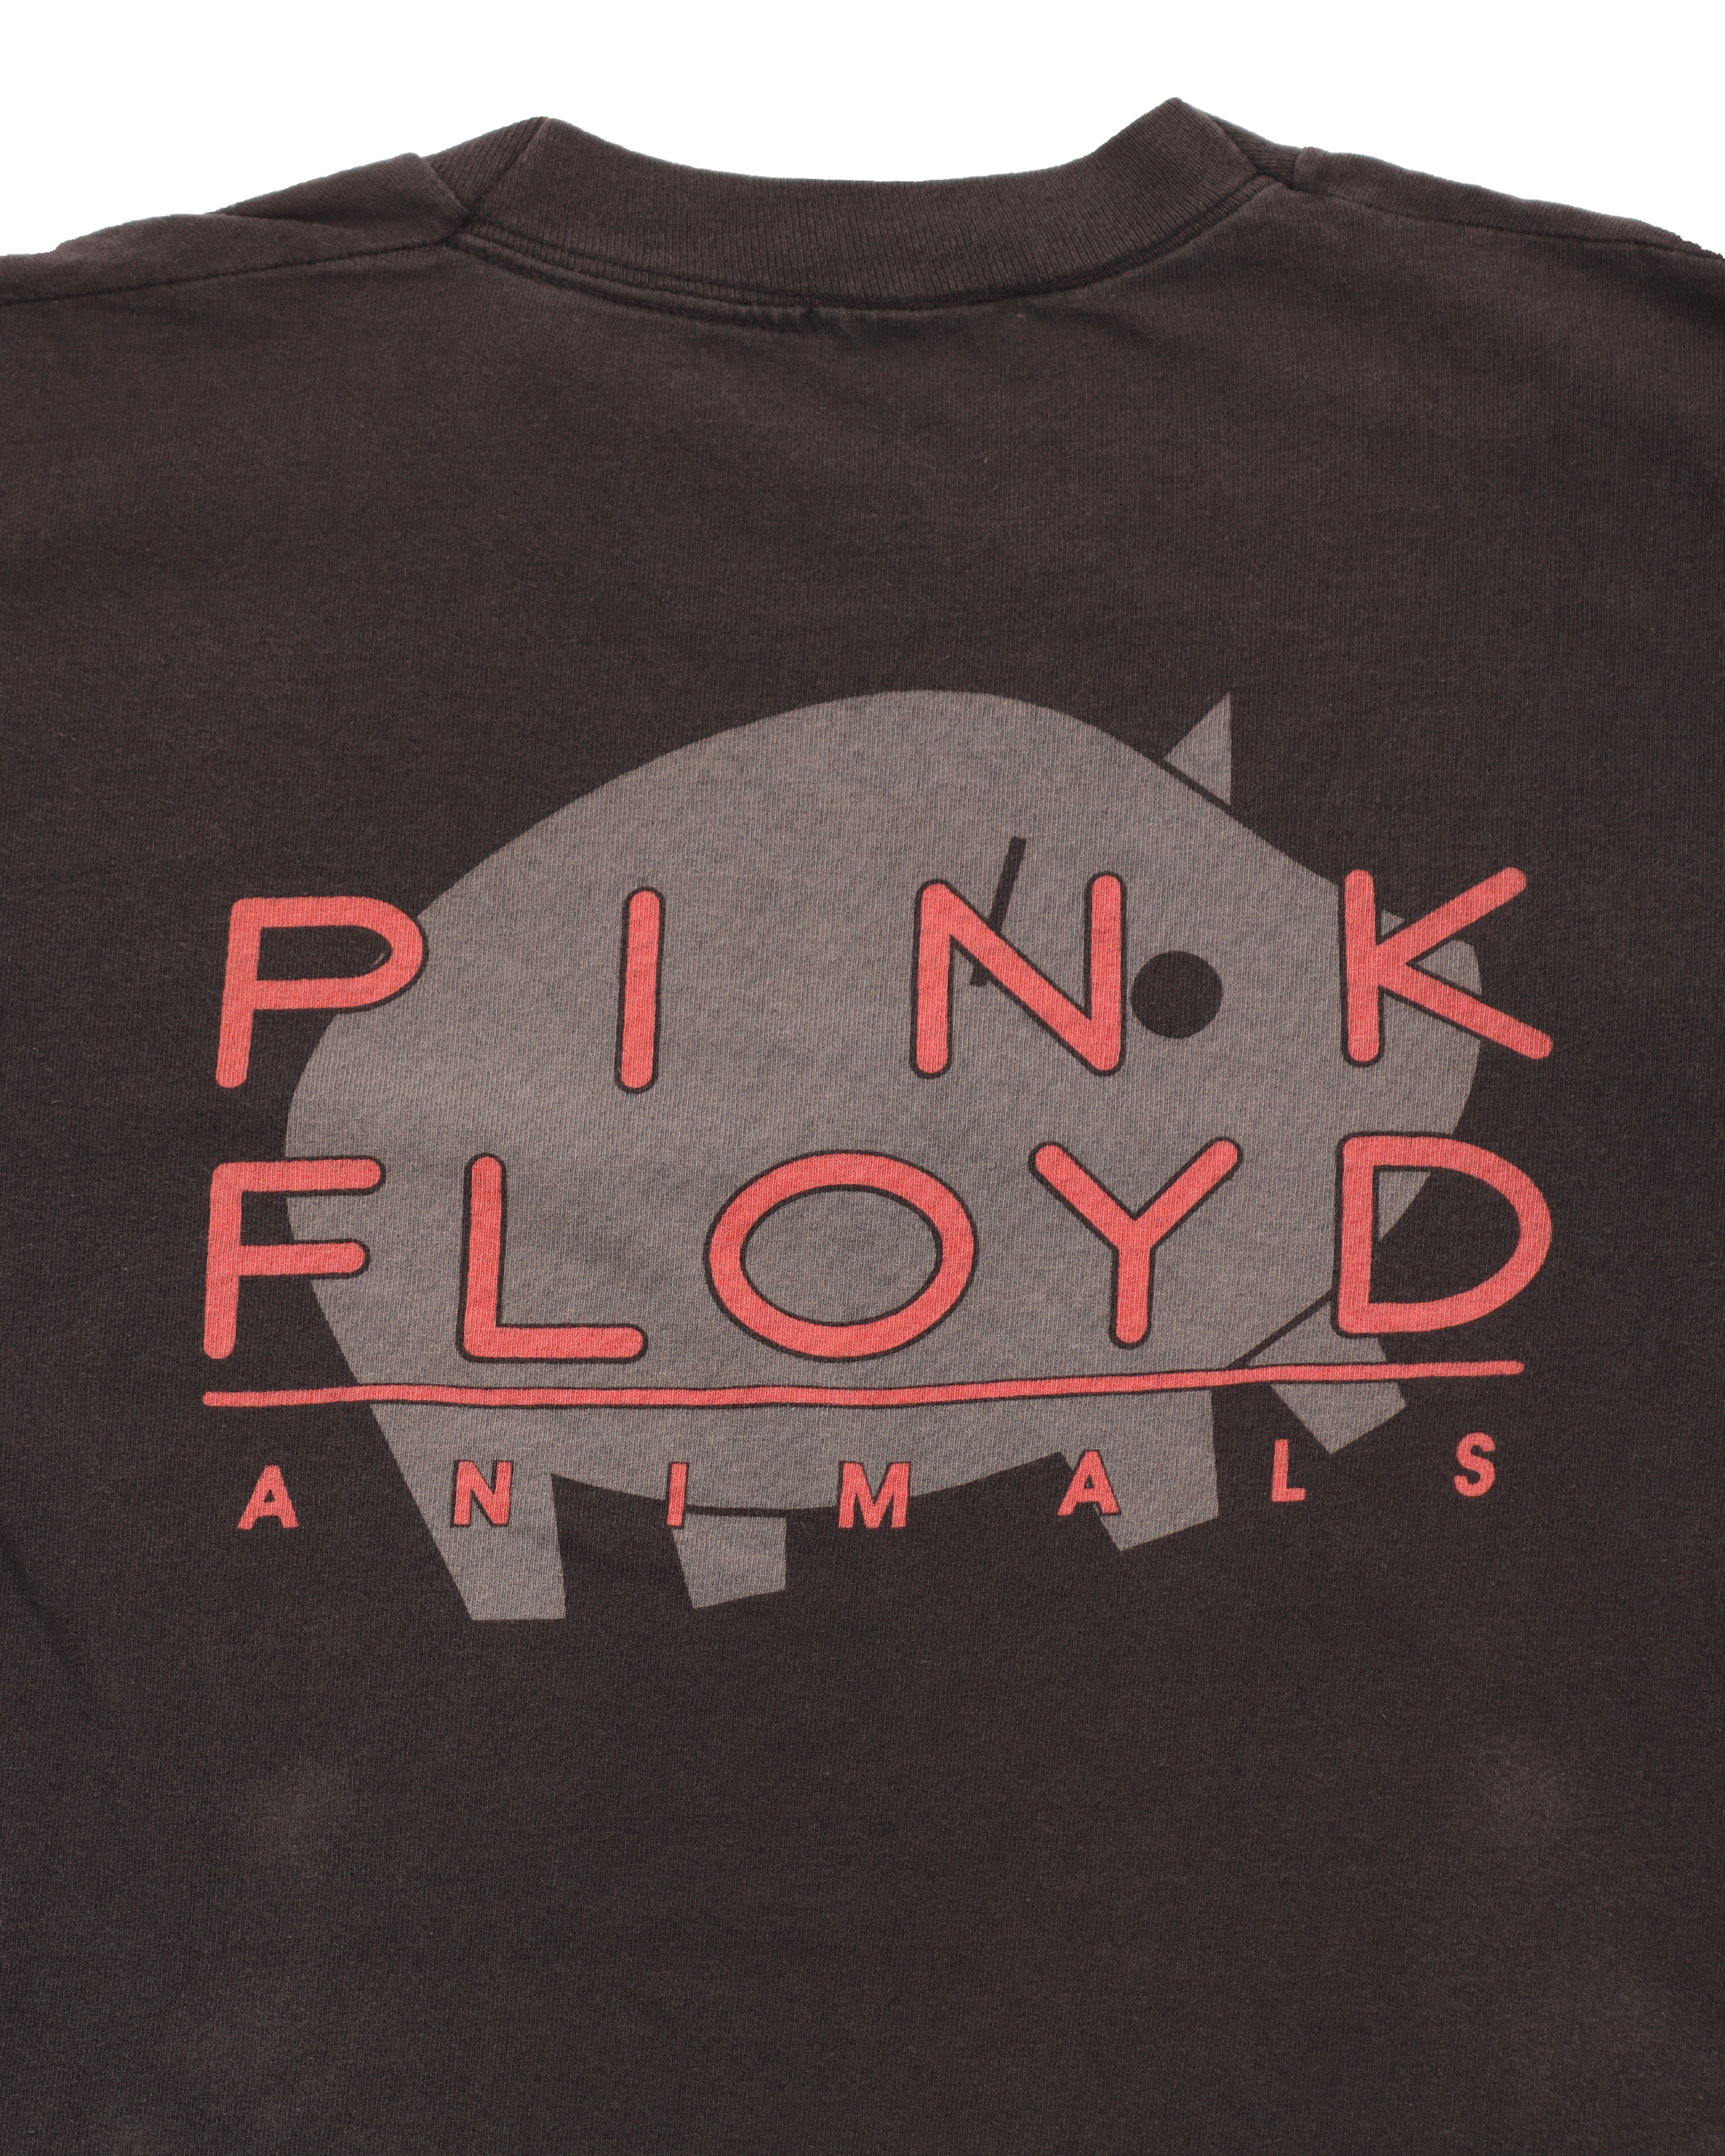 1991 Pink Floyd 'Animals' T-Shirt